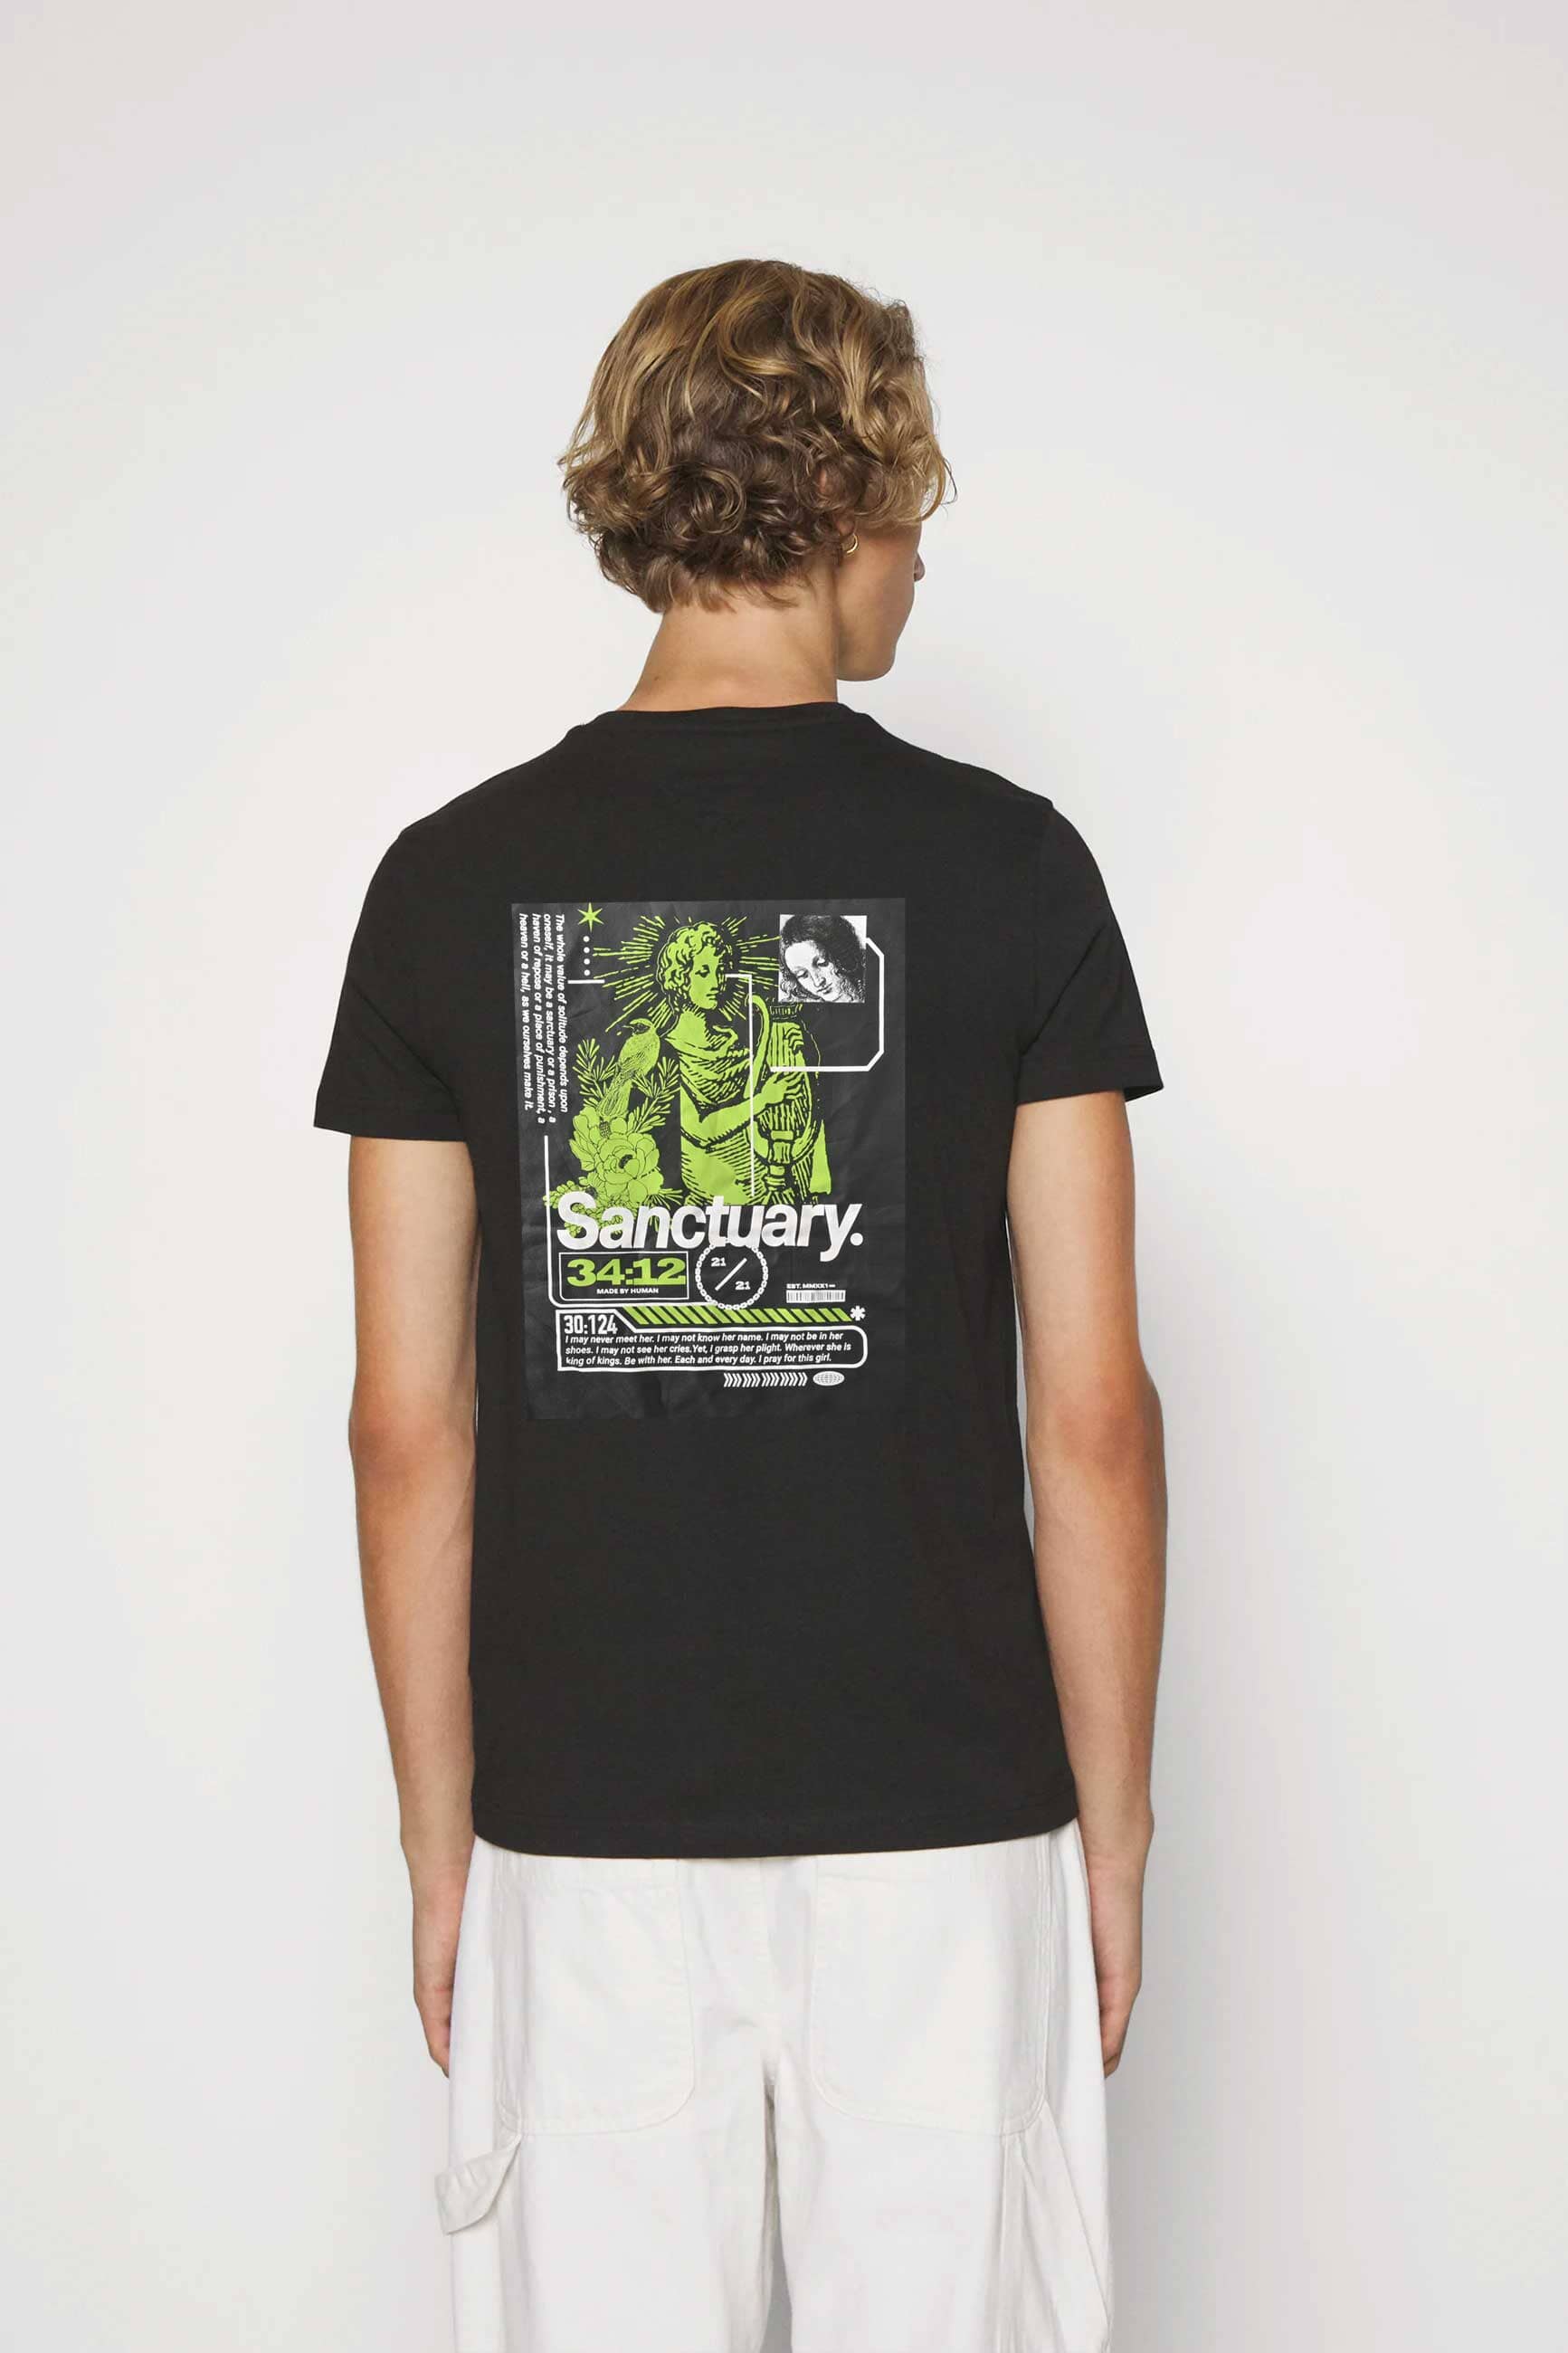 Polo Republica Men's Sanctuary Brooklyn Printed Crew Neck Tee Shirt